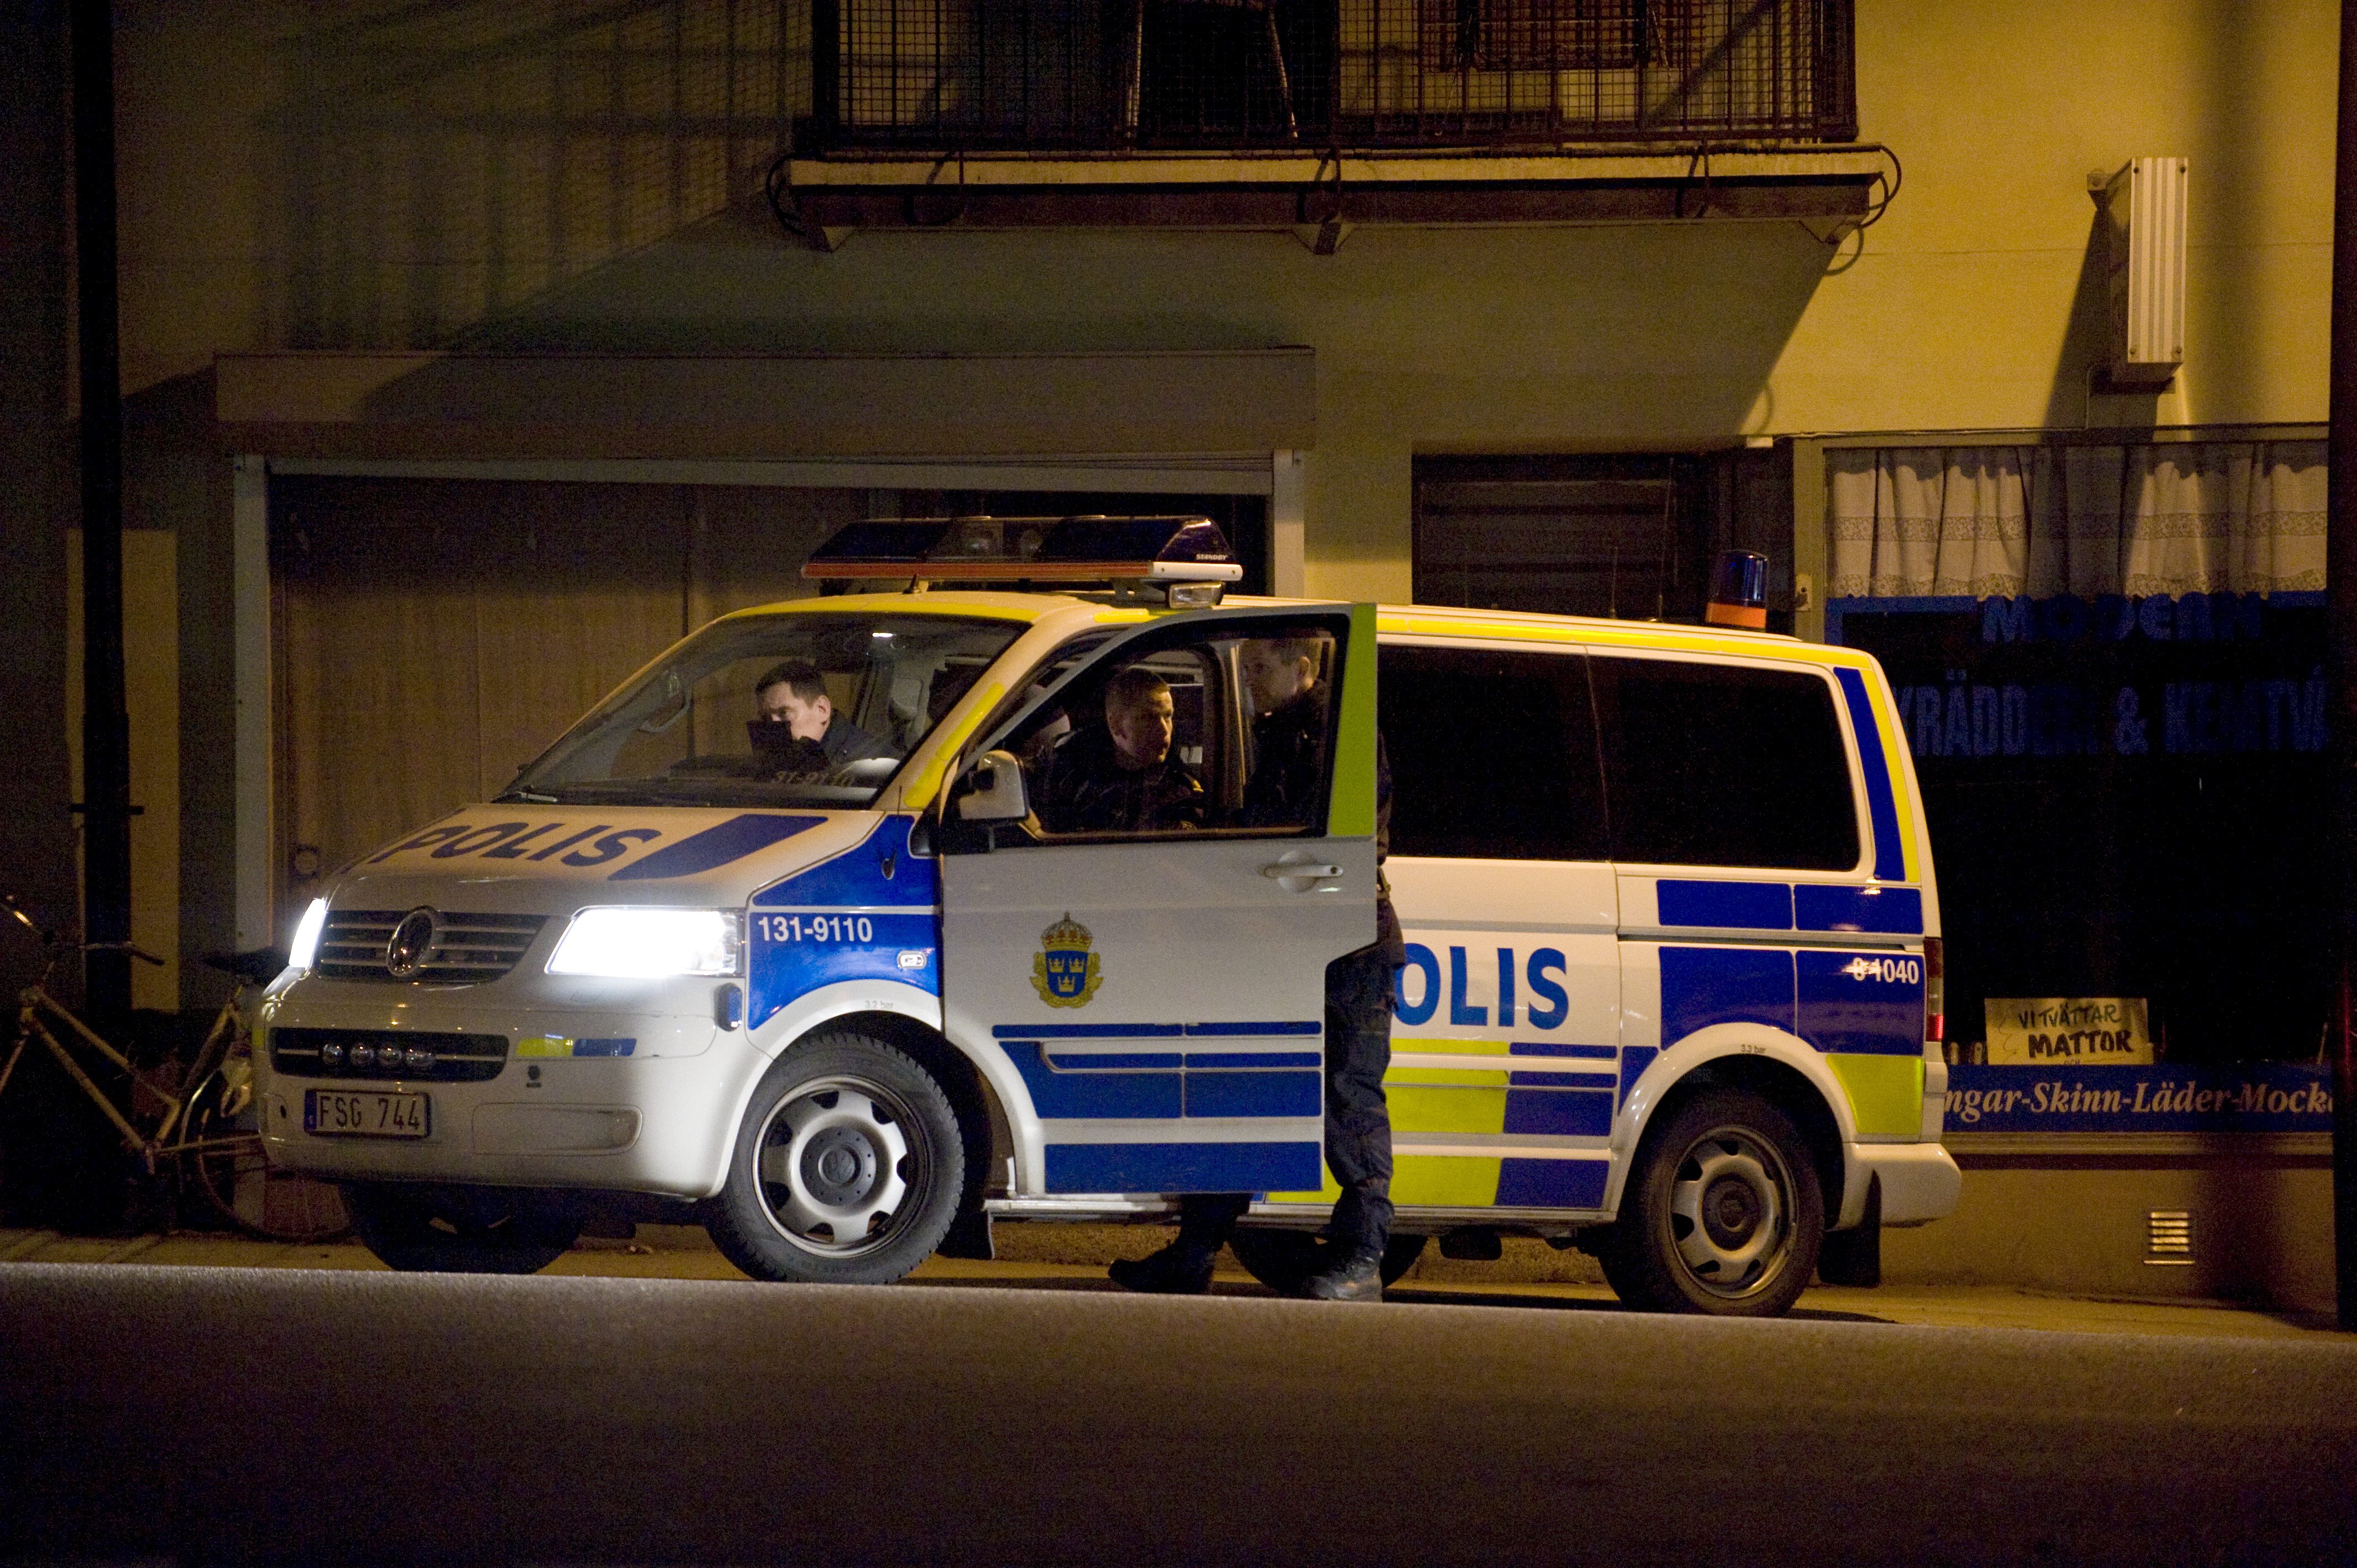 Polisen, Knivar, Sundsvall, Attack, Rikslarm